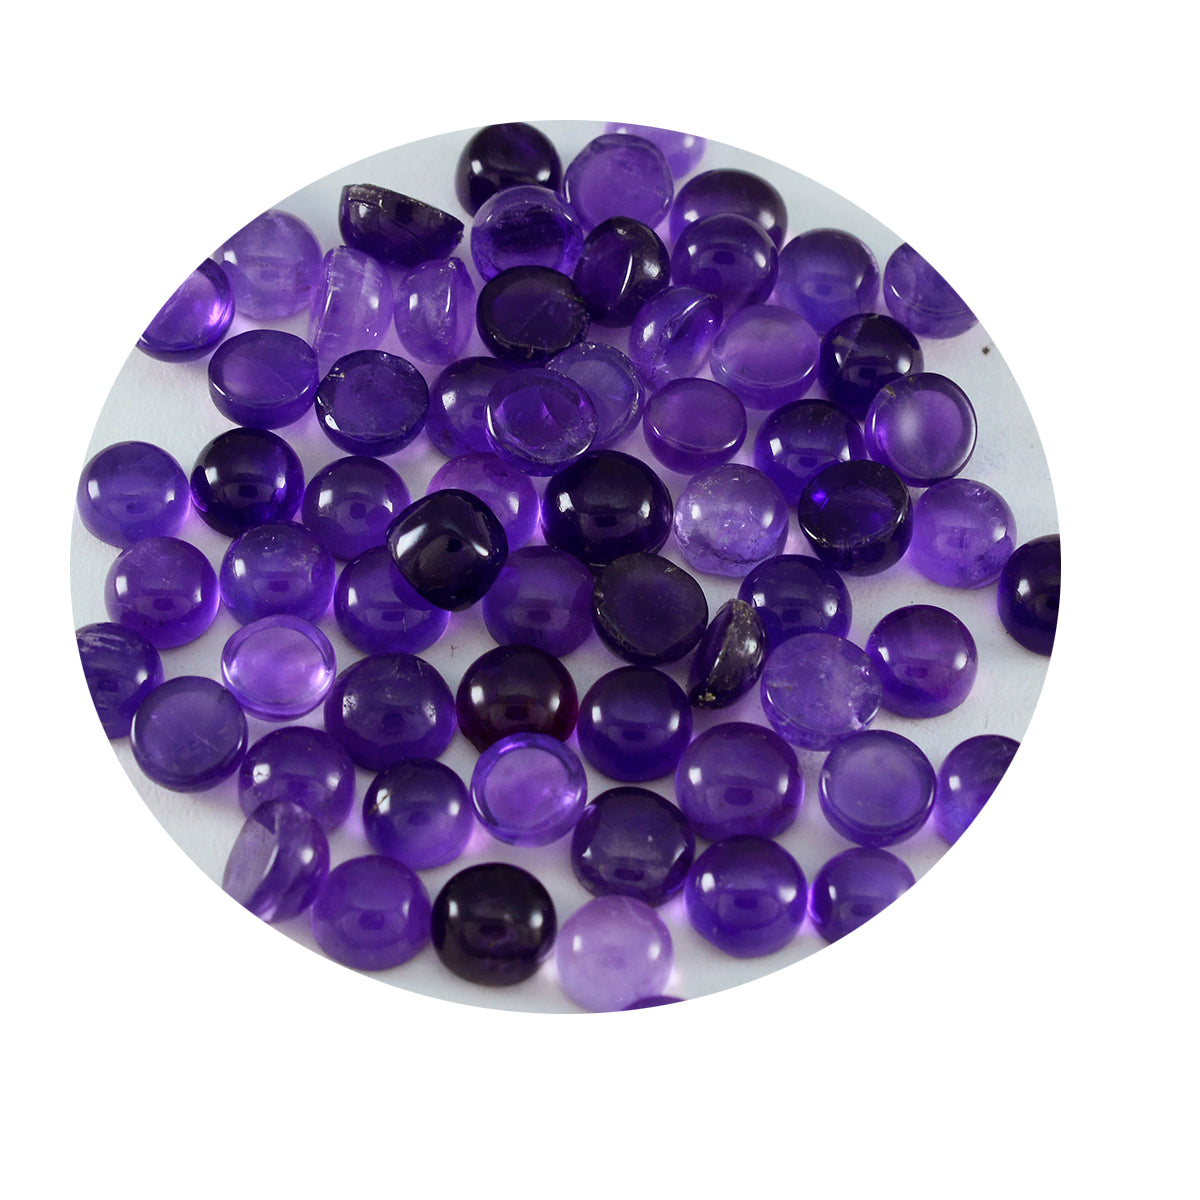 Riyogems 1PC Purple Amethyst Cabochon 4x4 mm Round Shape superb Quality Loose Gem